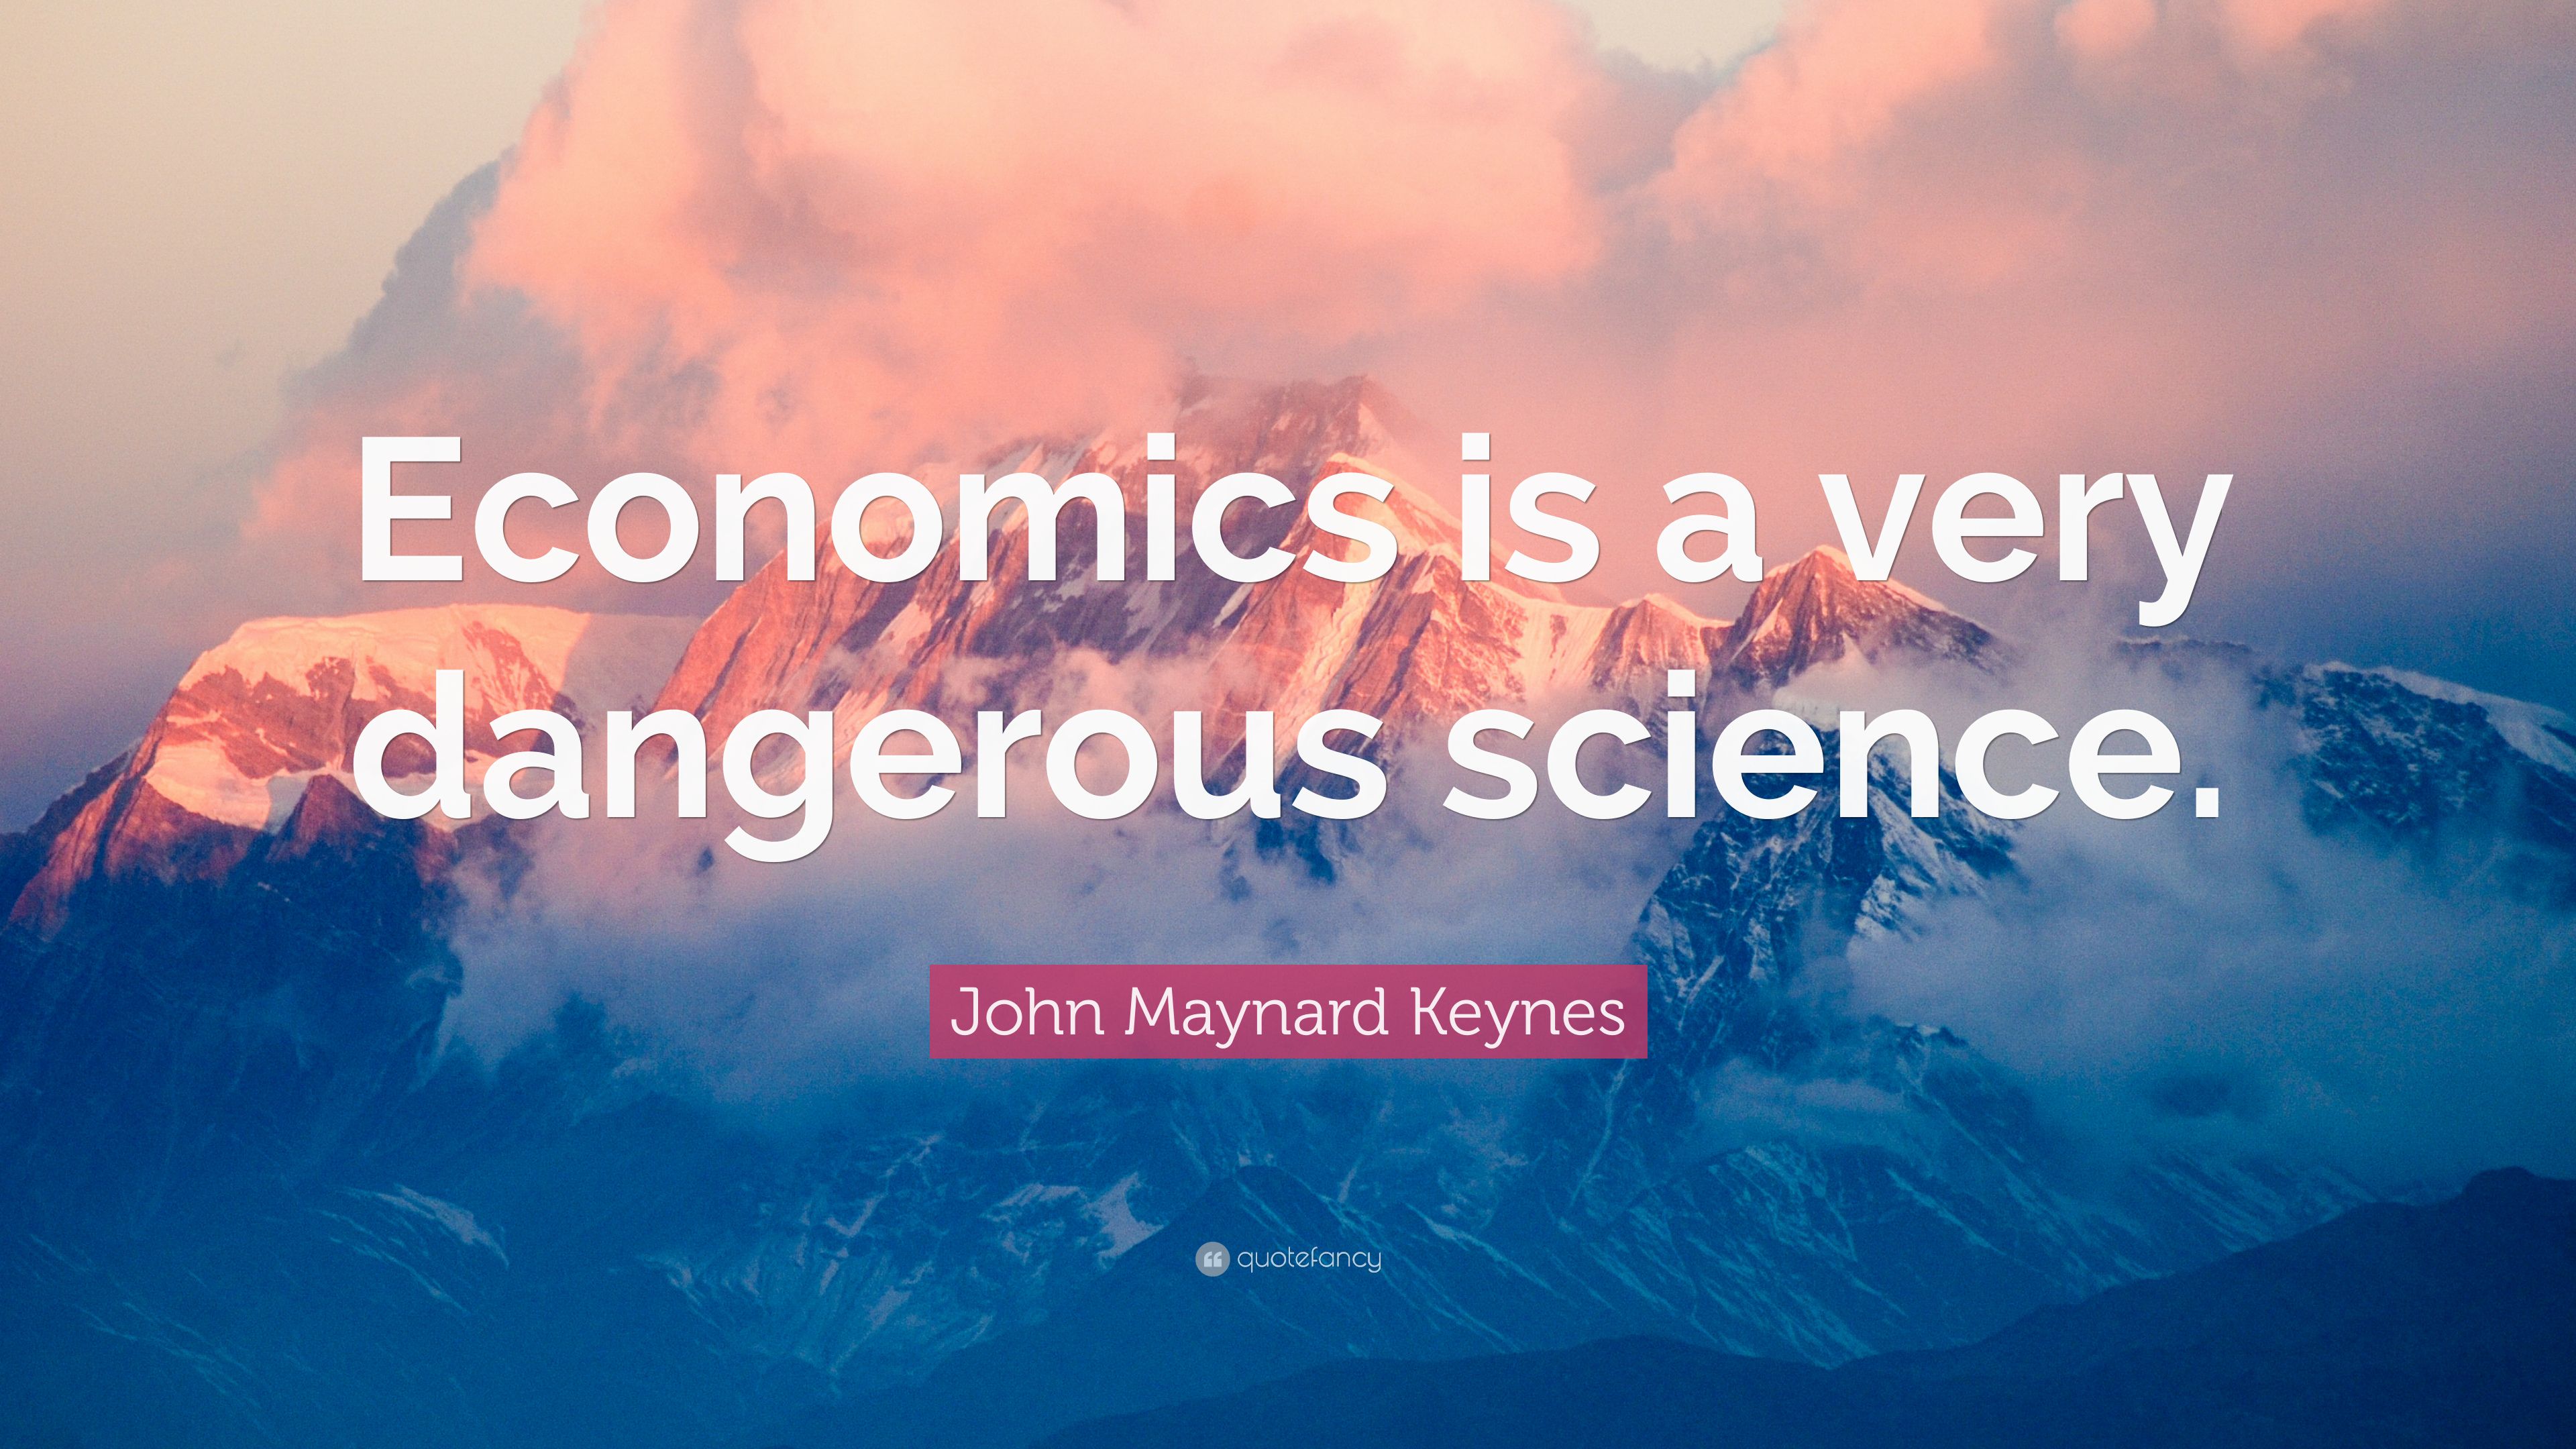 John Maynard Keynes Quote: “Economics is a very dangerous science.” (12 wallpaper)